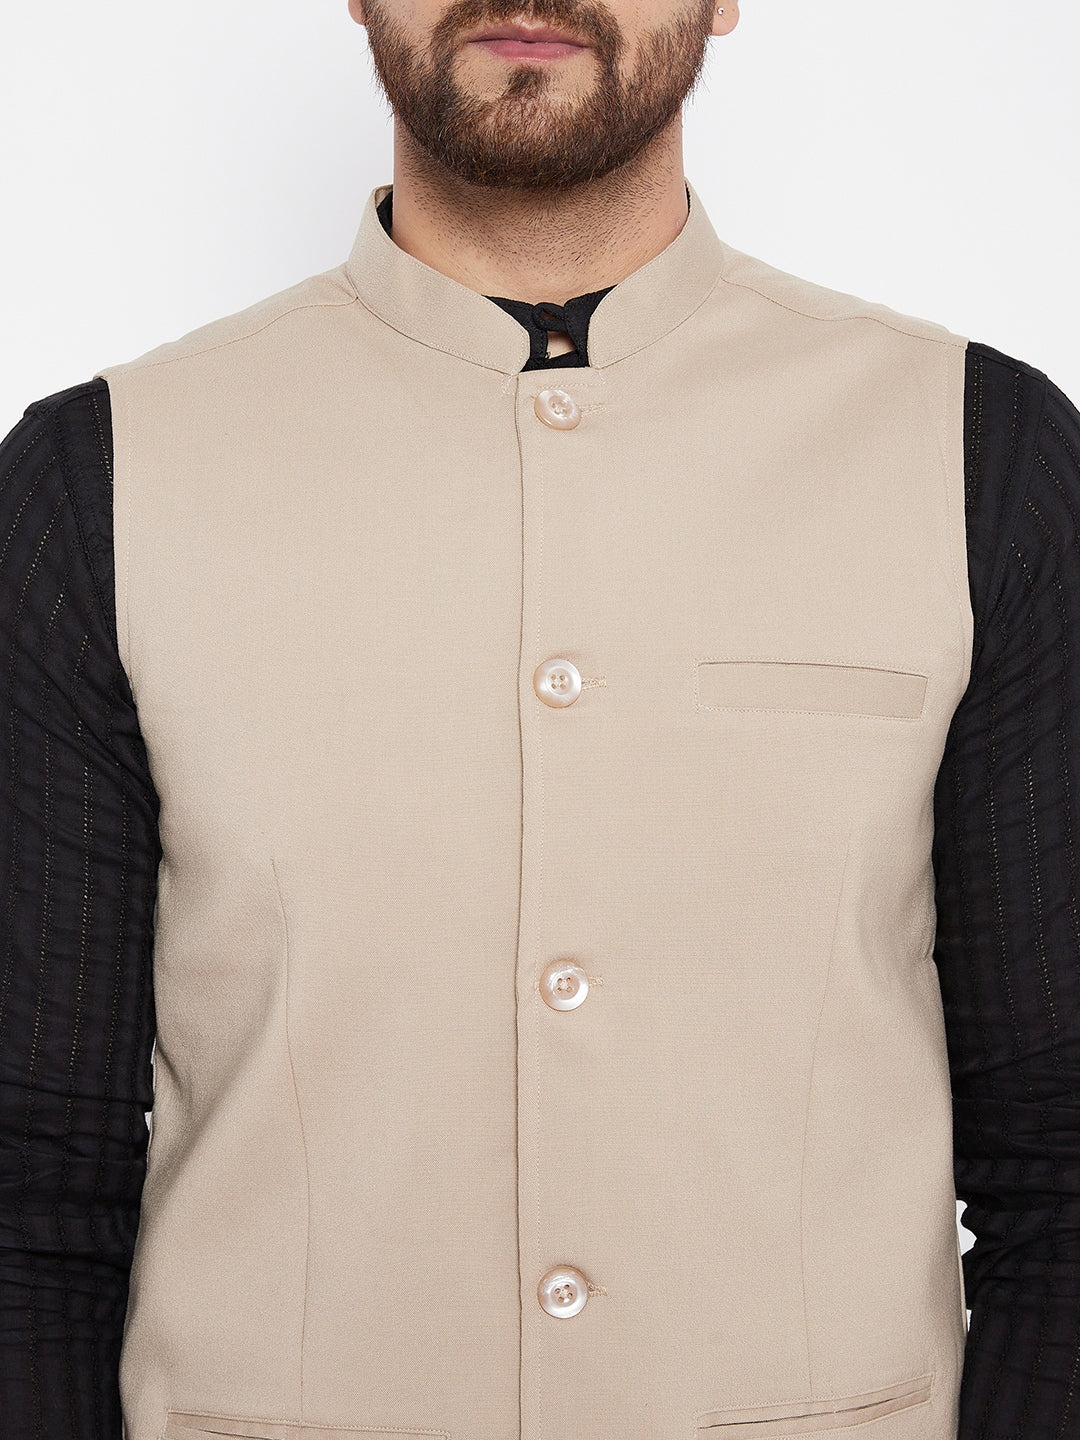 Men's Beige Woven Design Jacket - Even Apparels